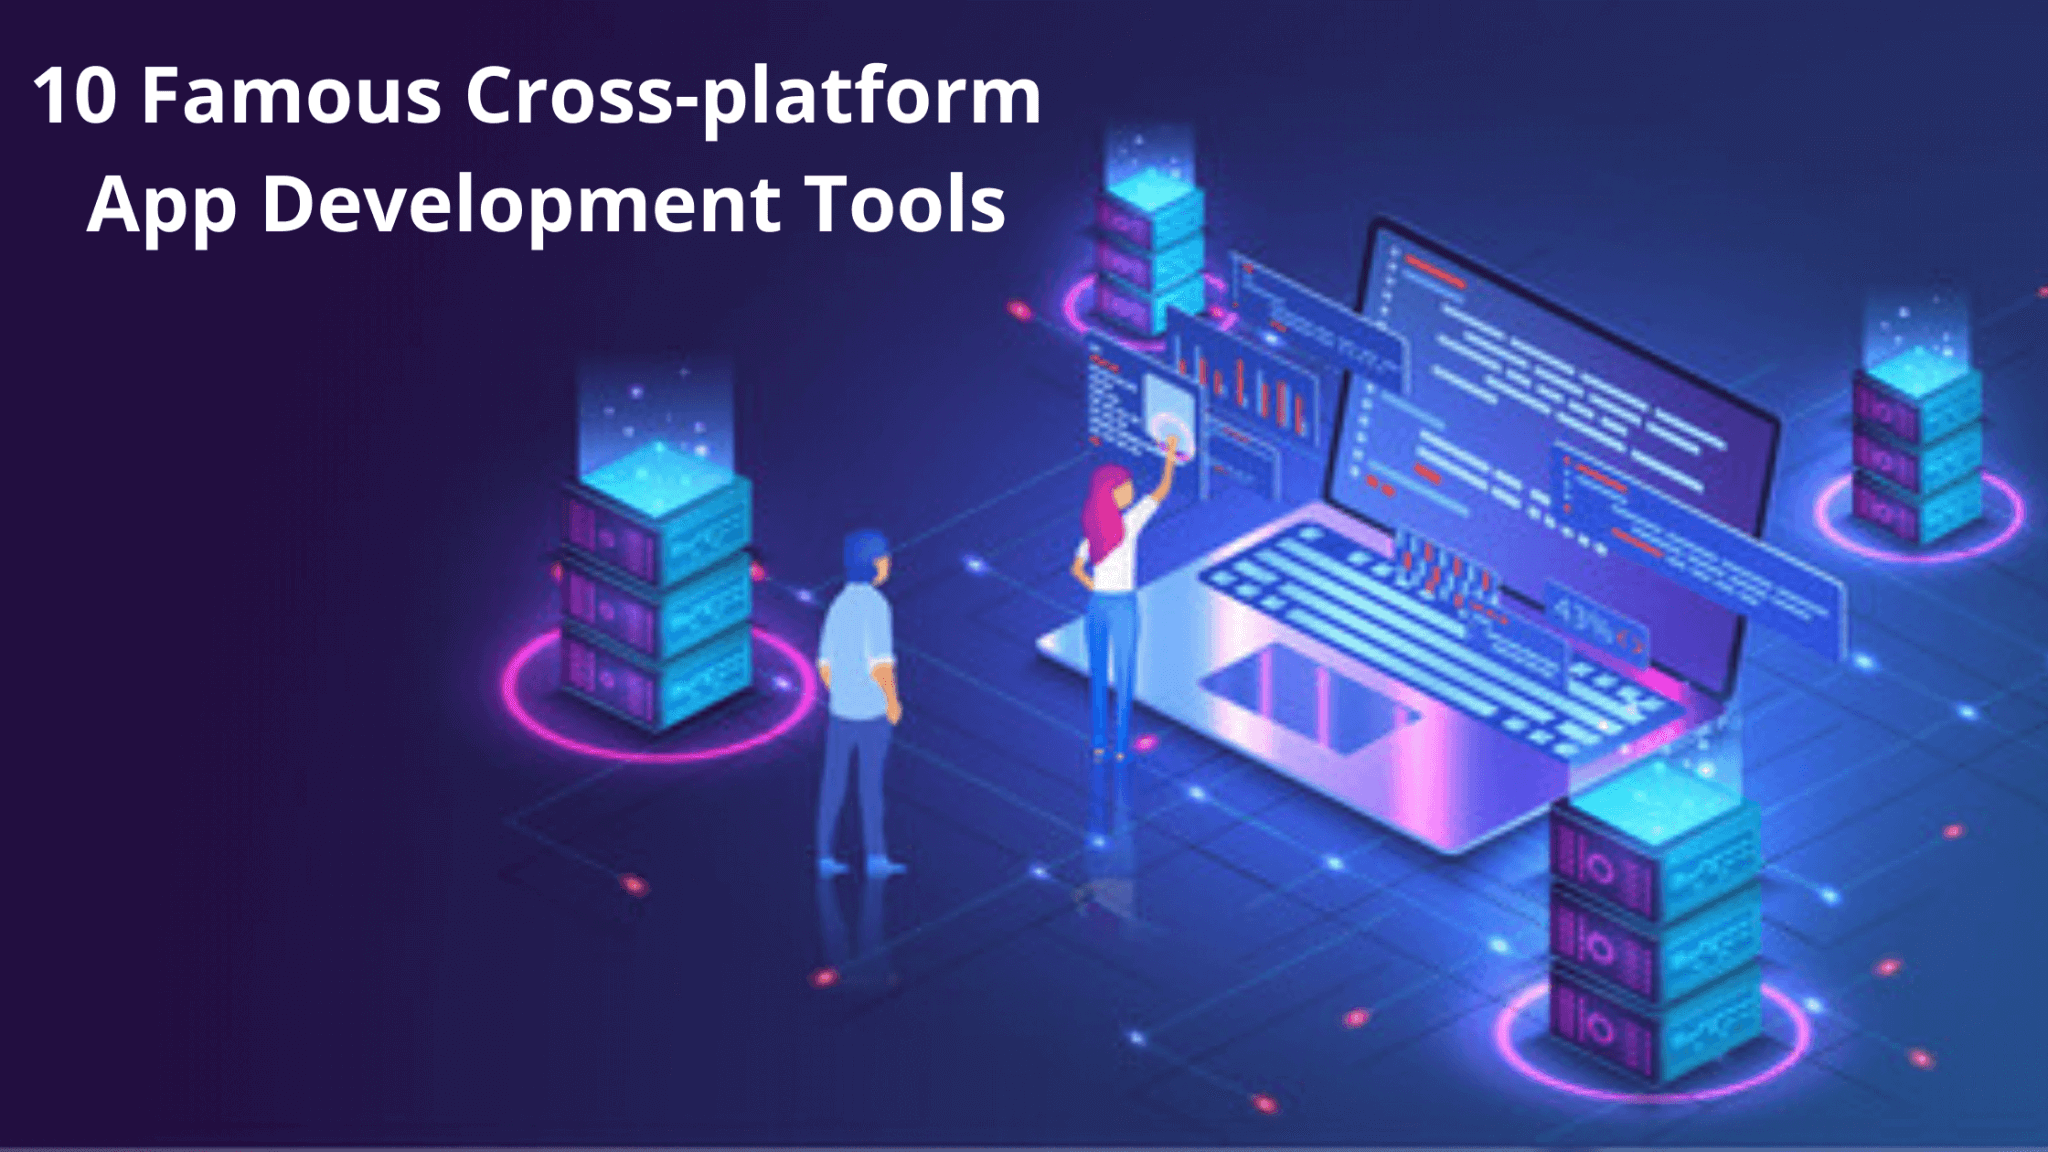 Cross platform development tools